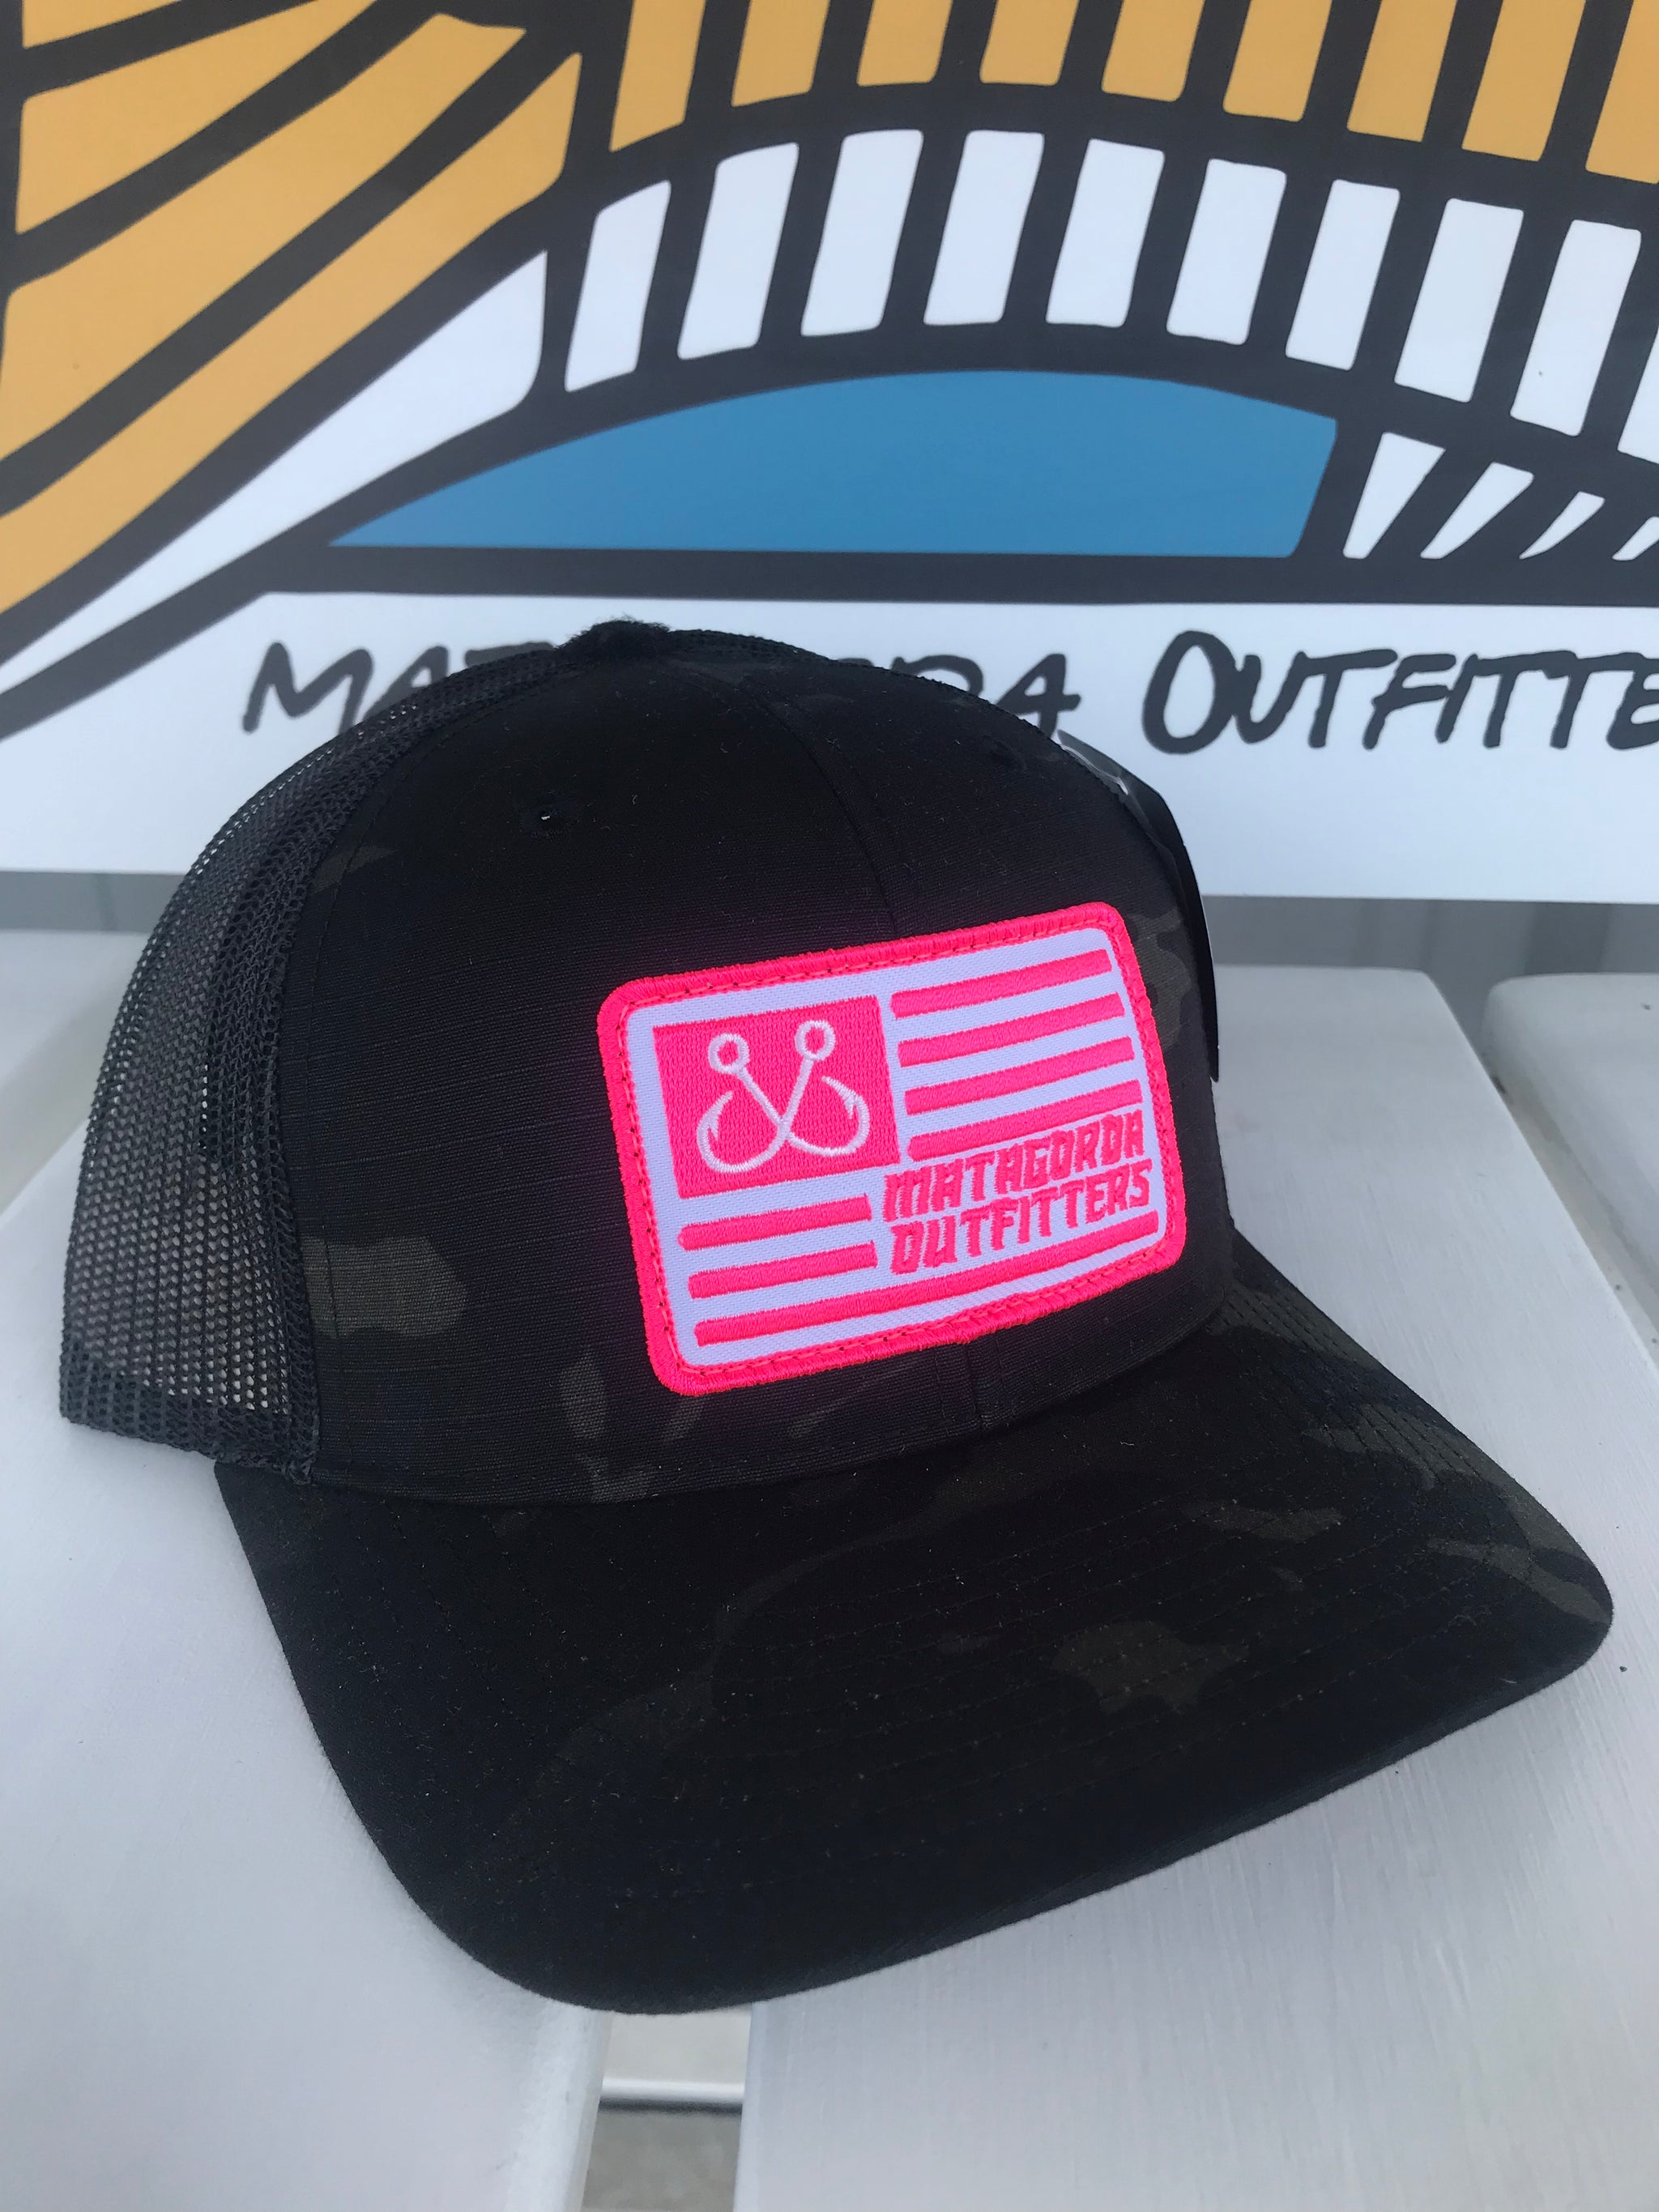 Hats - Matagorda Outfitters